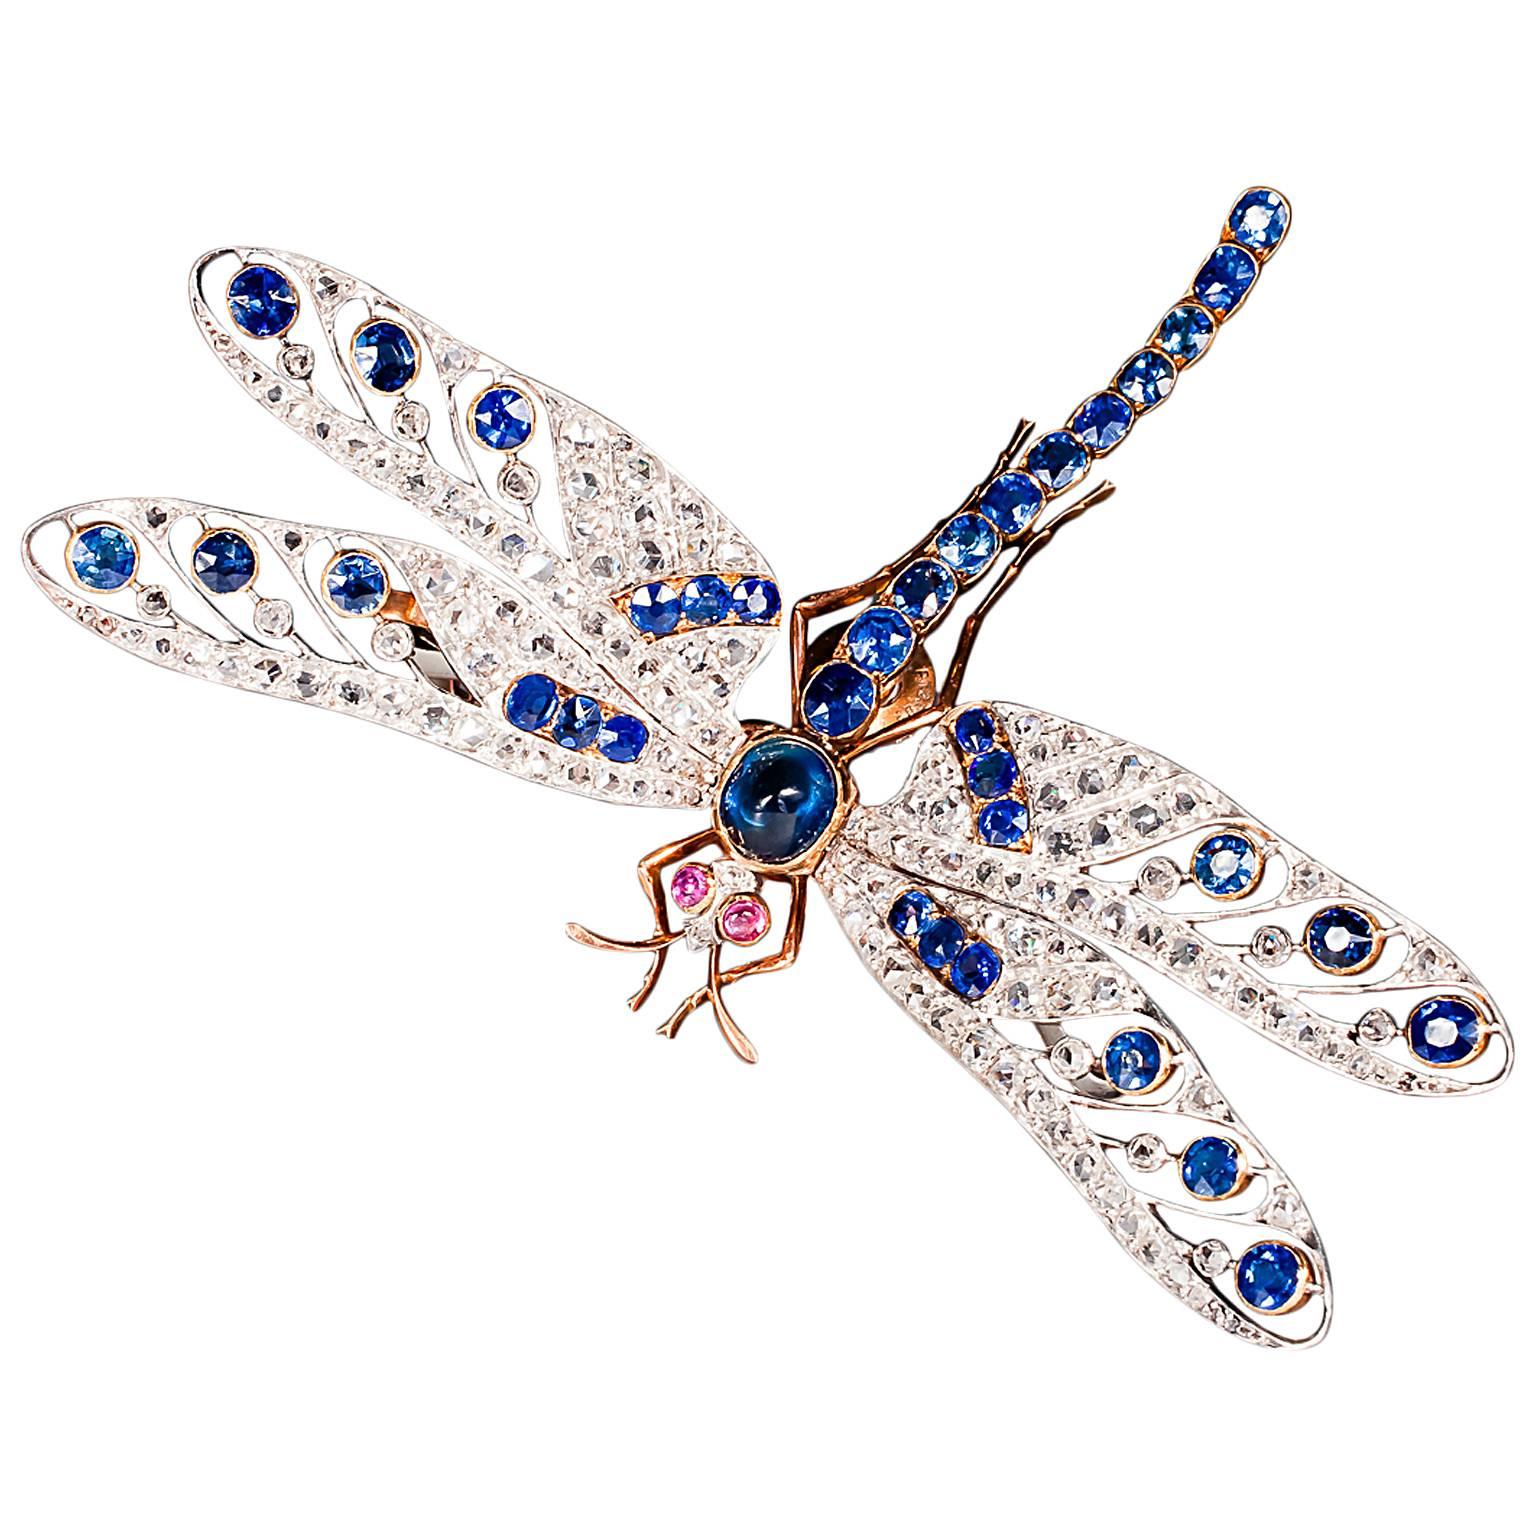 Joseph Nivelon Magnificent Antique En Tremblant Dragonfly Brooch  For Sale